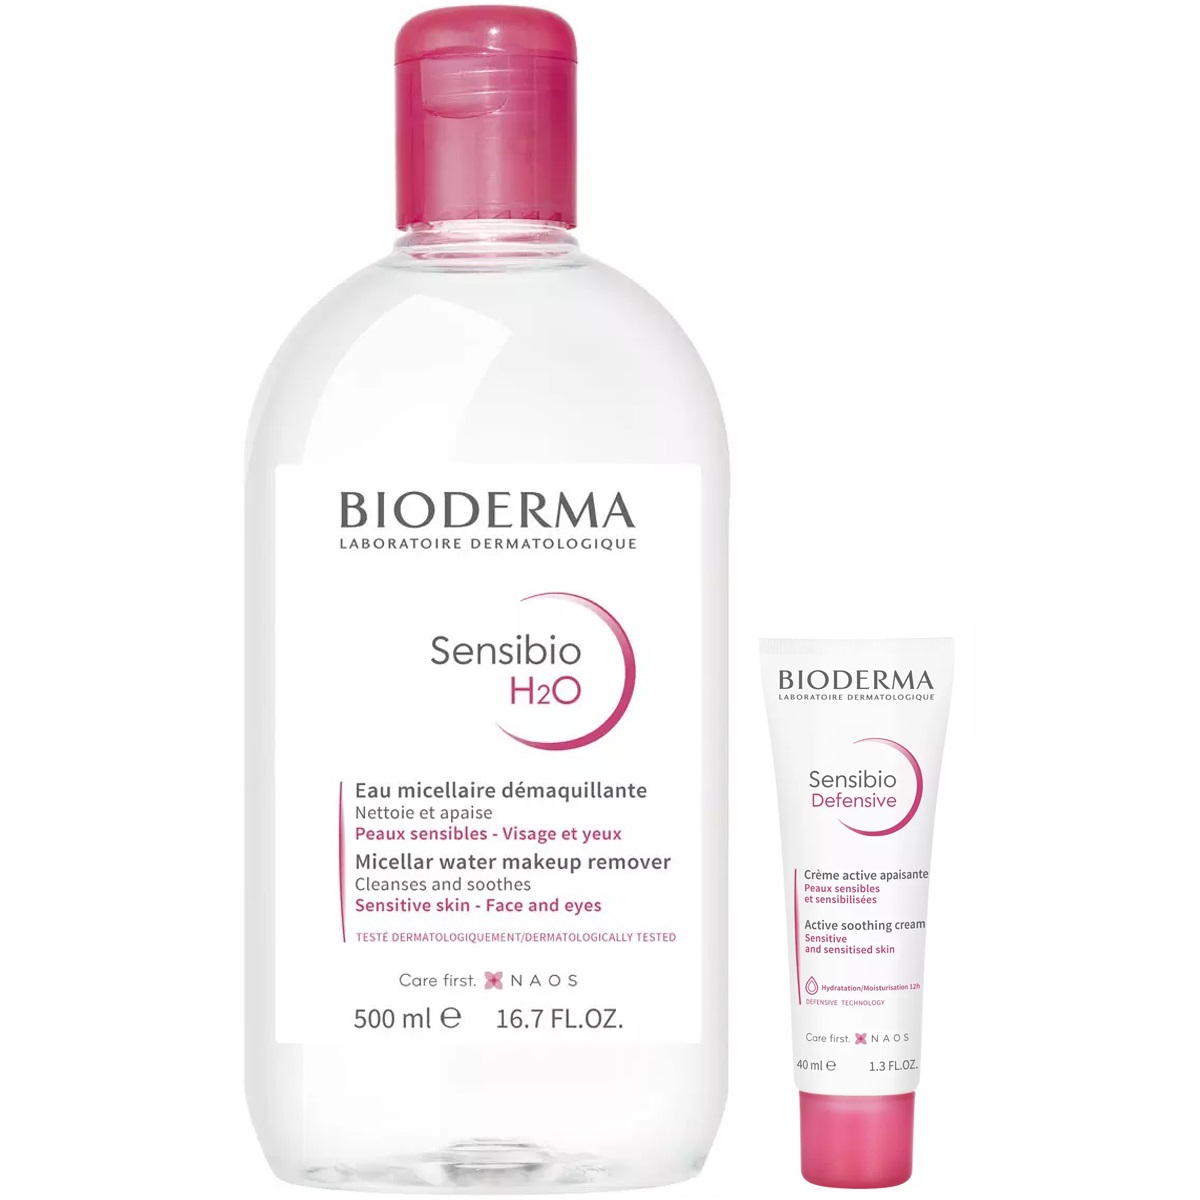 Bioderma Набор для чувствительной кожи: мицеллярная вода, 500 мл + крем, 40 мл (Bioderma, Sensibio) bioderma набор сенсибио н2о мицеллярная вода для чувствительной кожи 2х100 мл bioderma sensibio